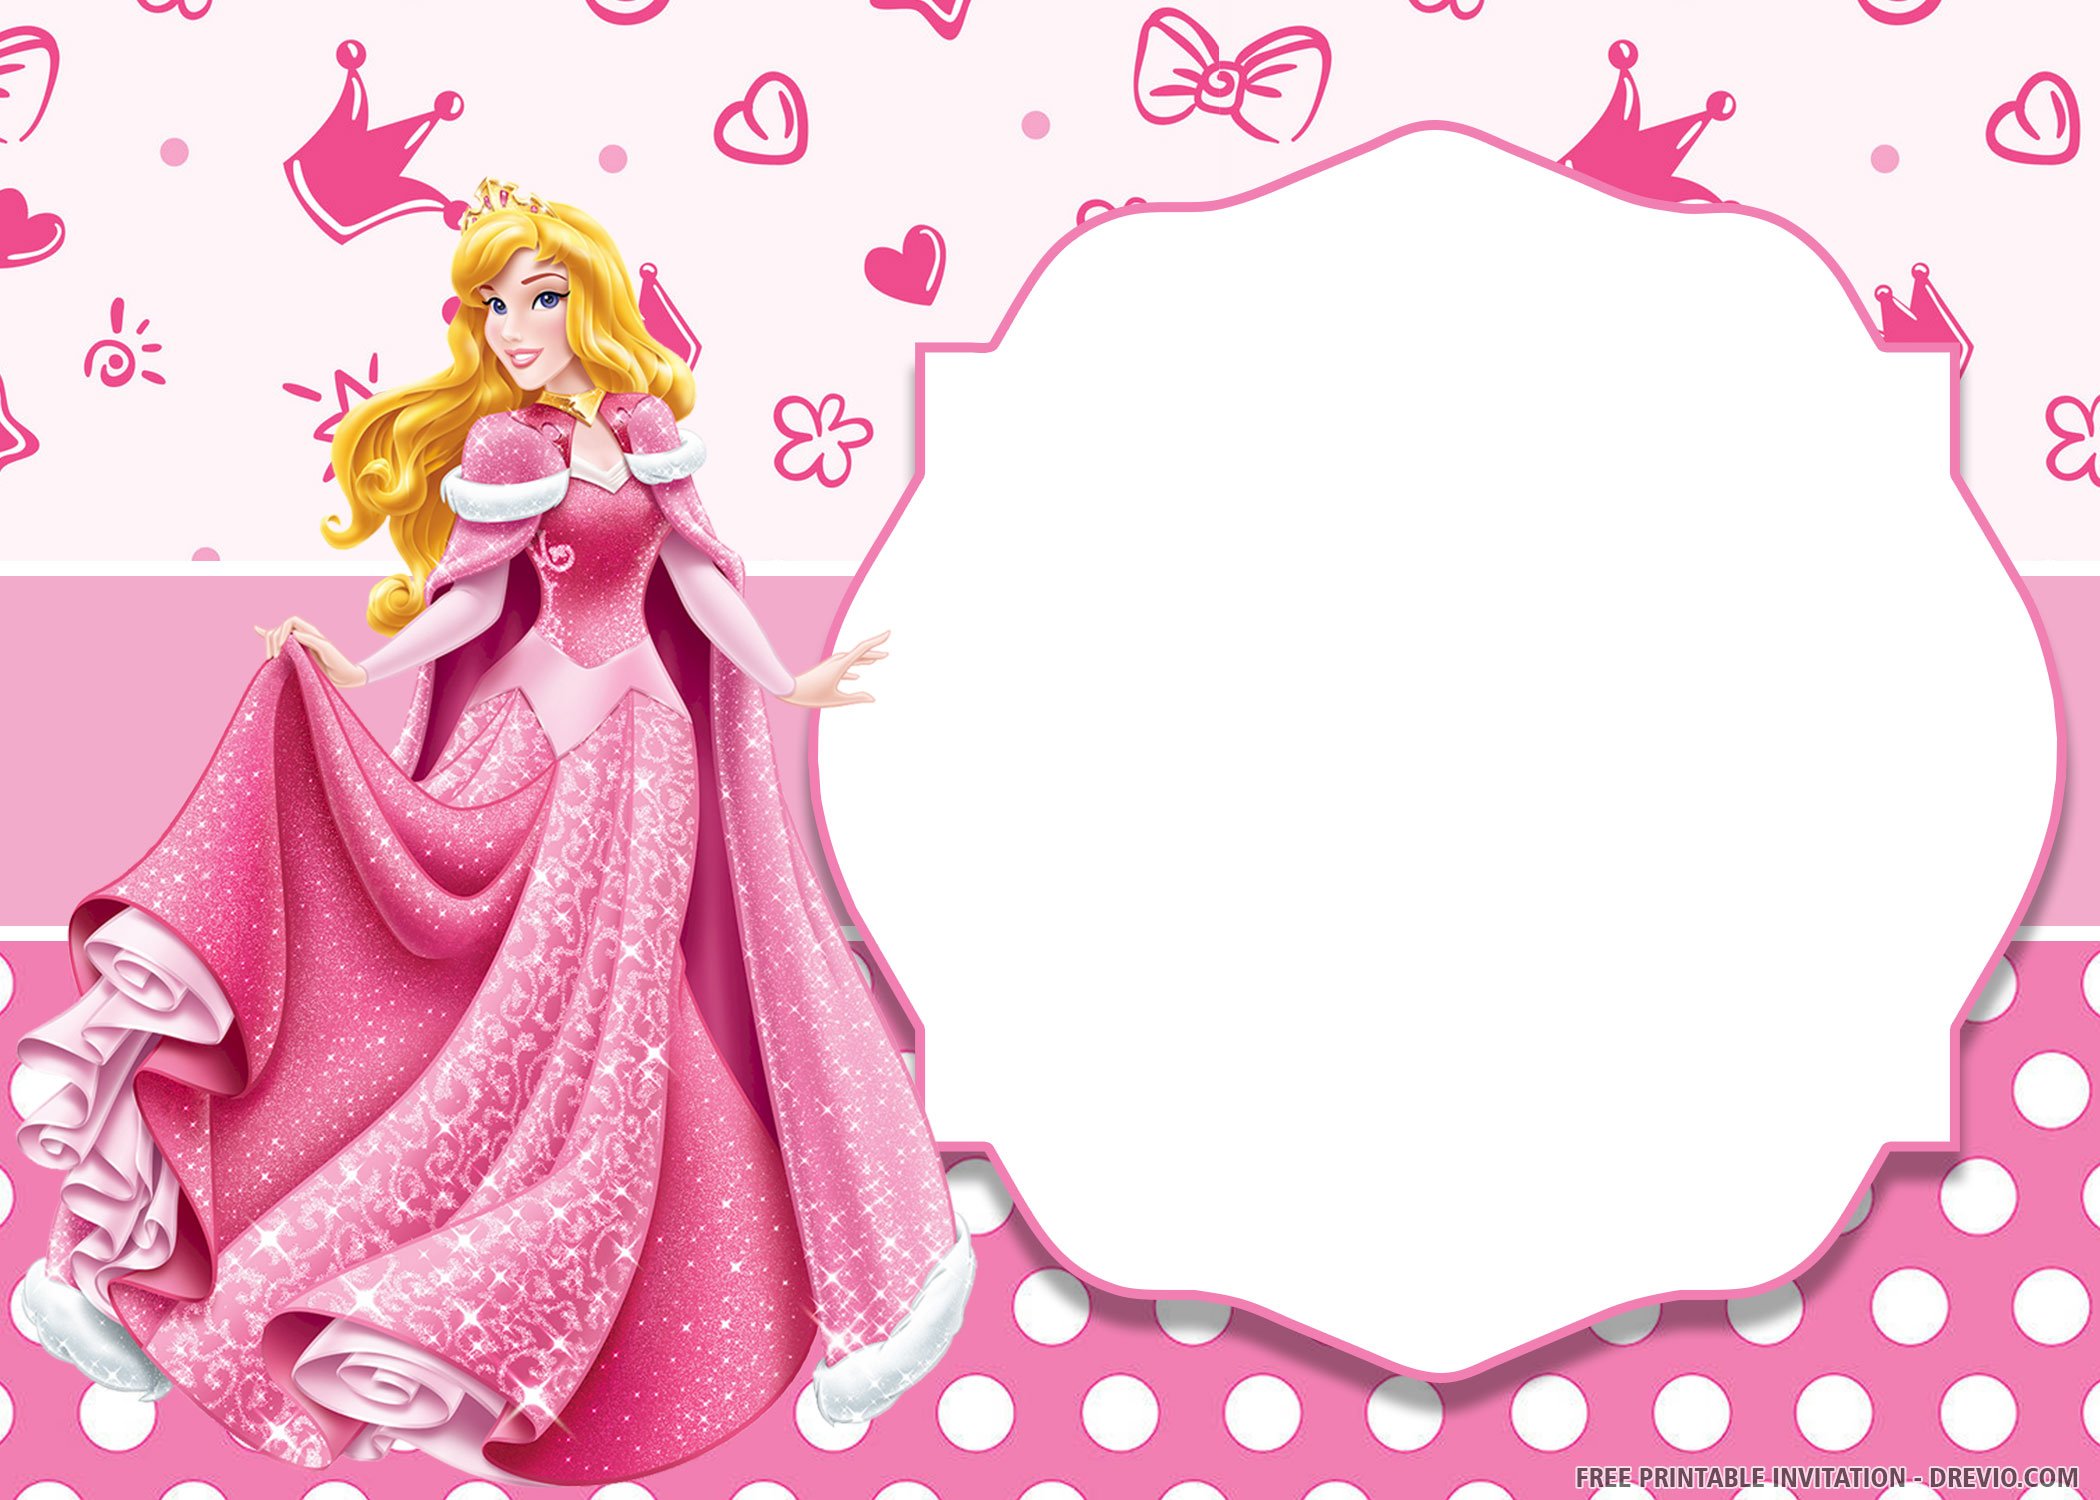 Free Printable Beautiful Princess Invitation TemplatesFREE PRINTABLE